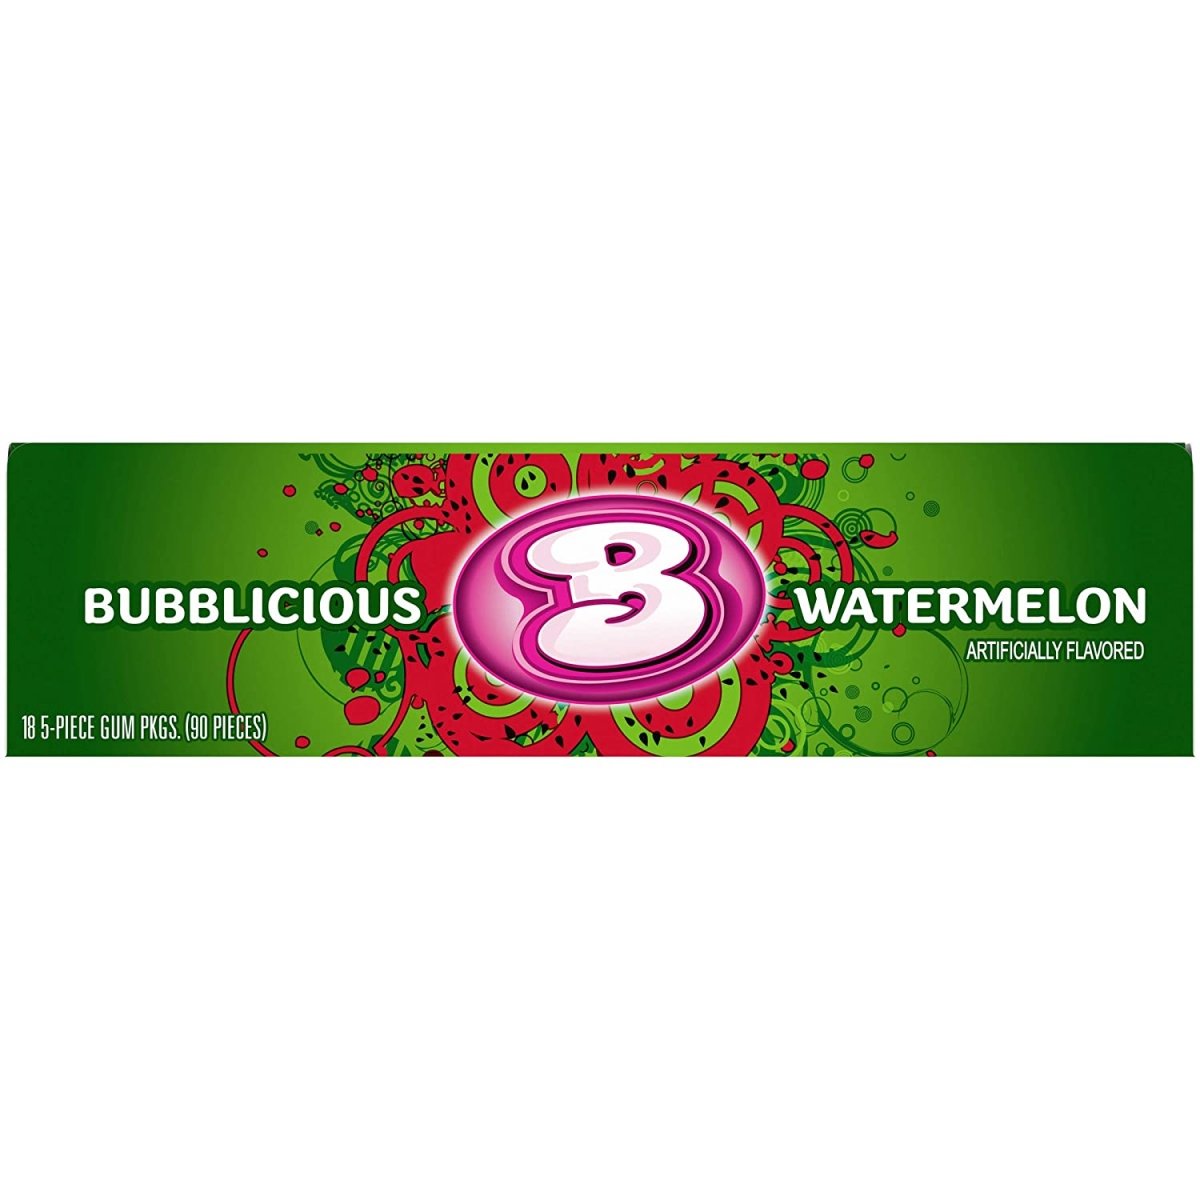 Bubblicious Watermelon Gum 37g - Candy Mail UK